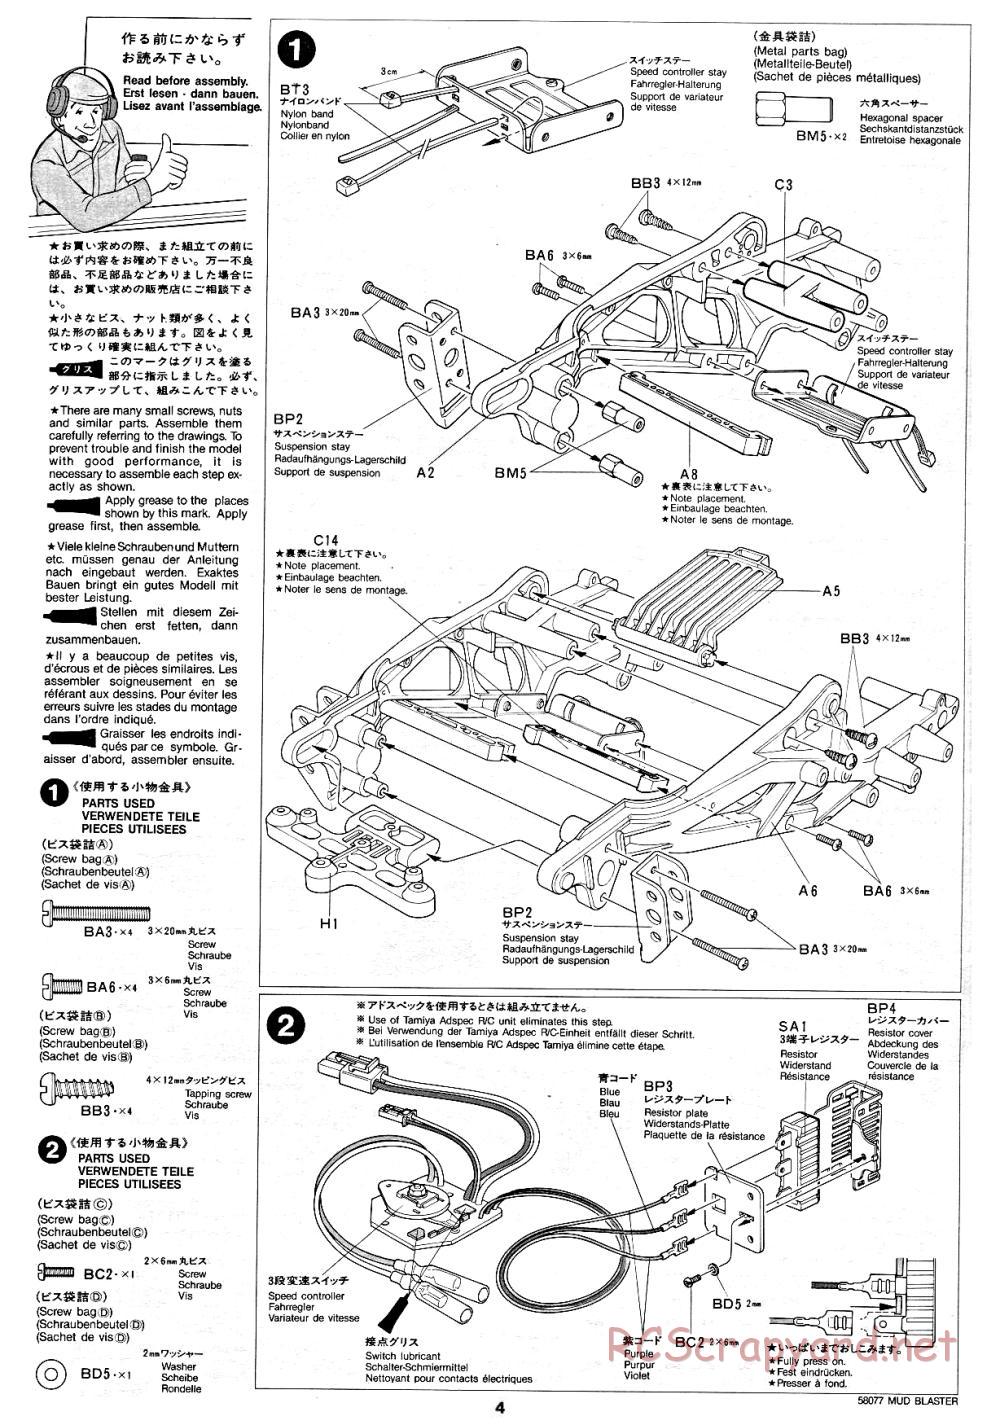 Tamiya - Mud Blaster - 58077 - Manual - Page 4